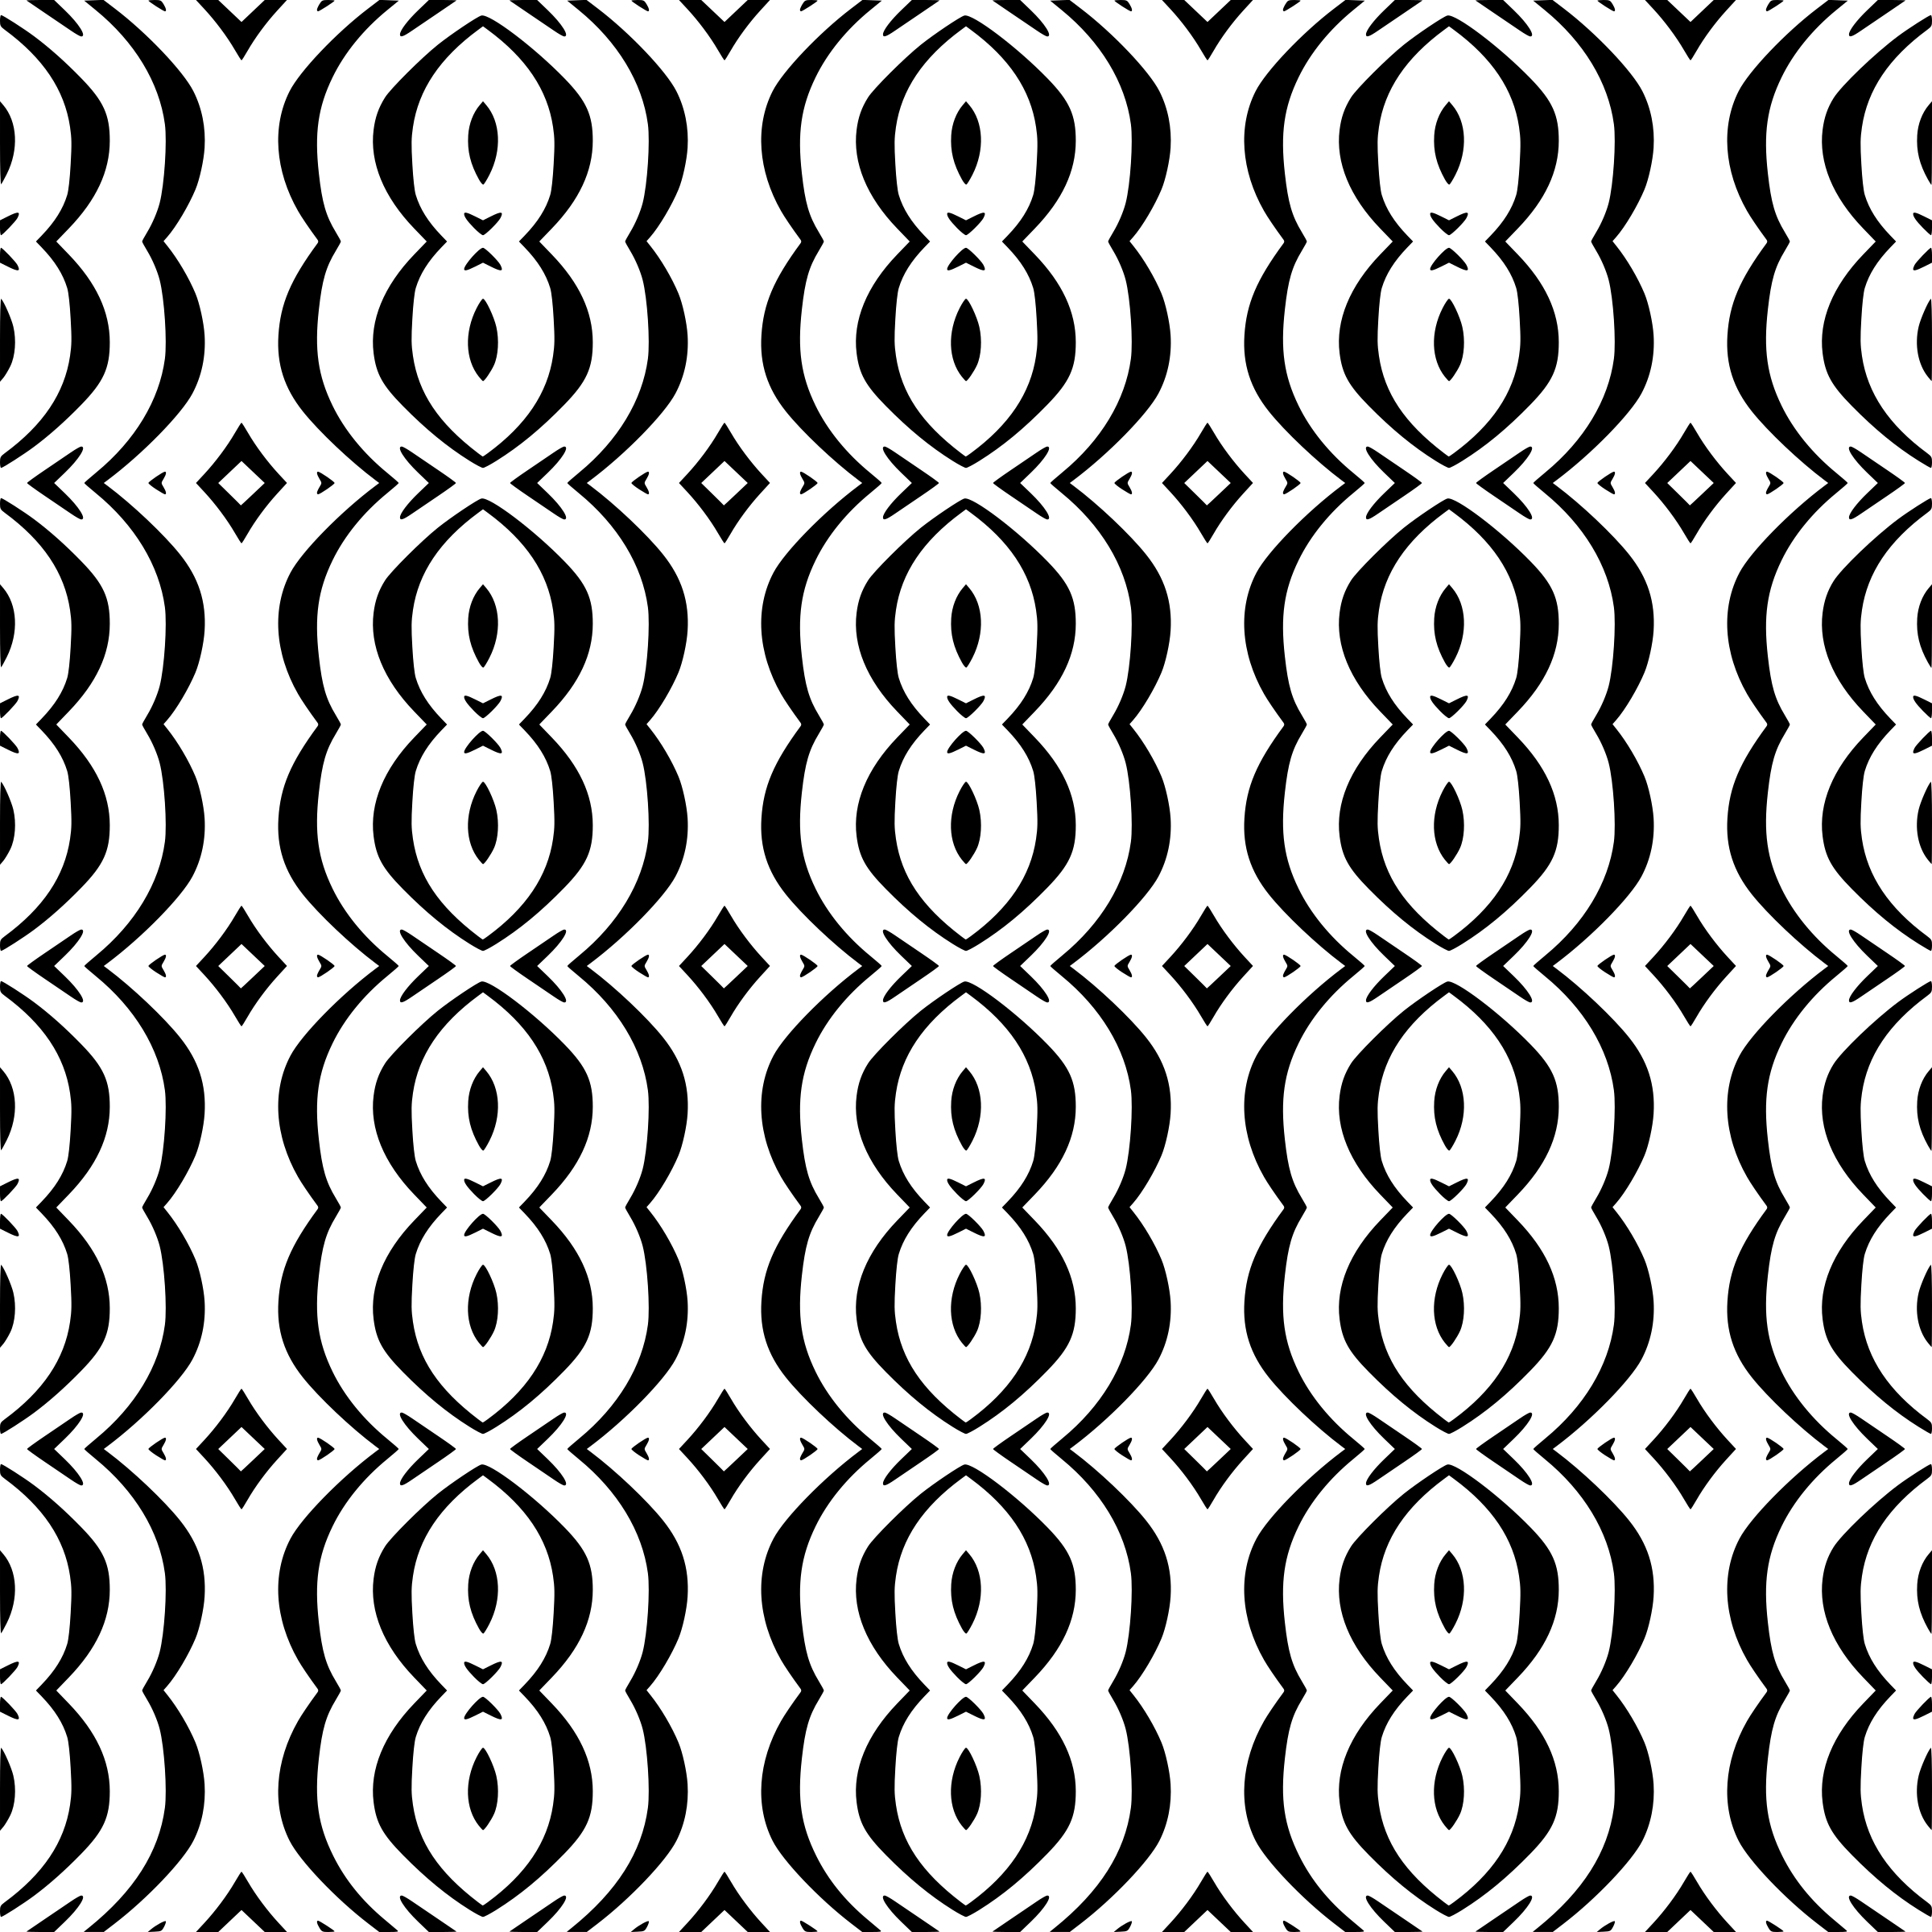 Clipart - Background pattern 56 (black)